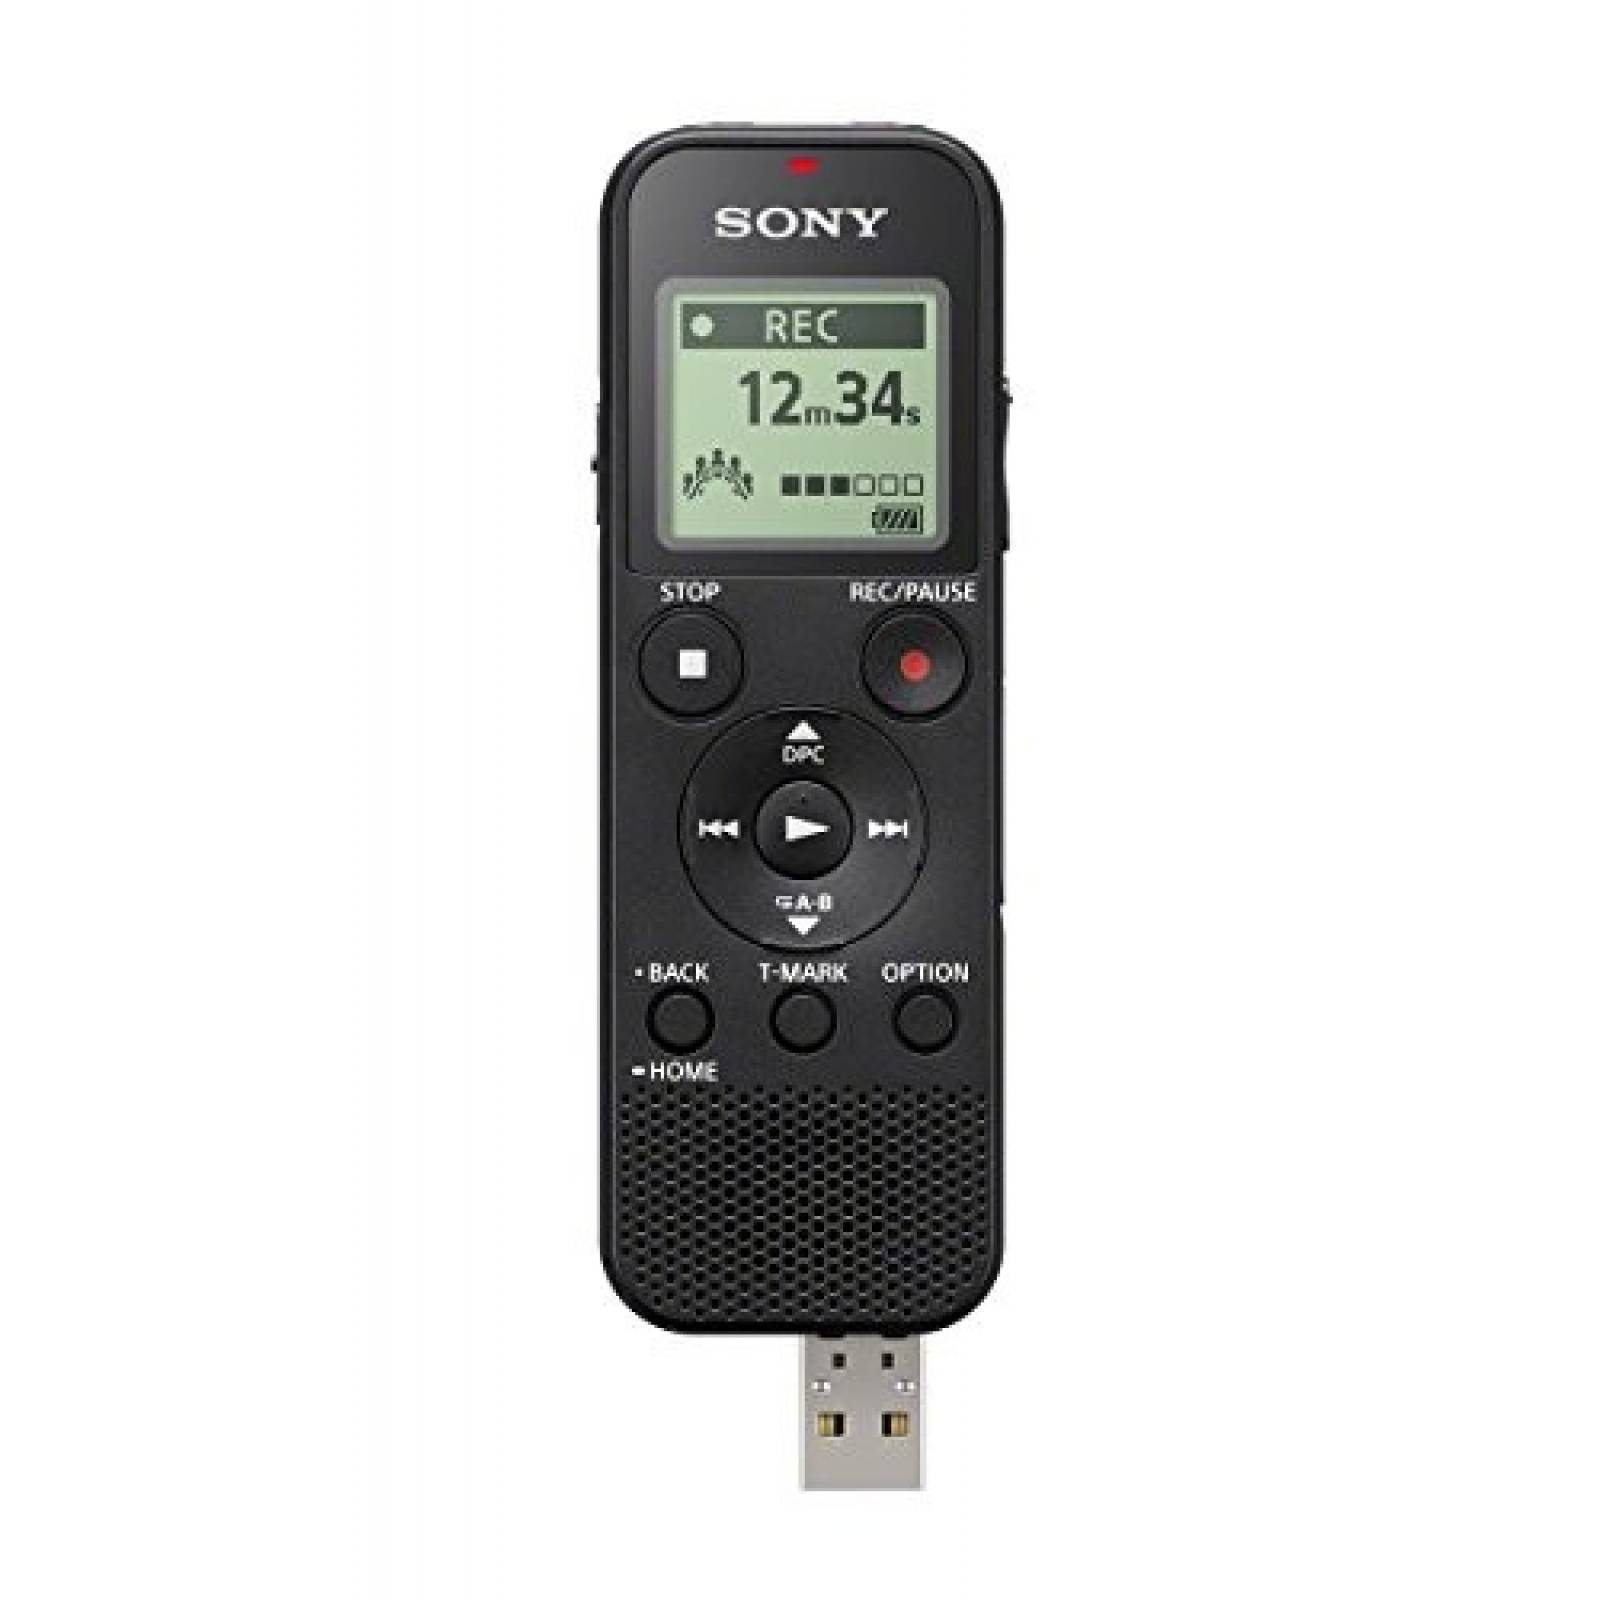 Grabadora de voz Sony icdpx370 con usb integrado -Negro